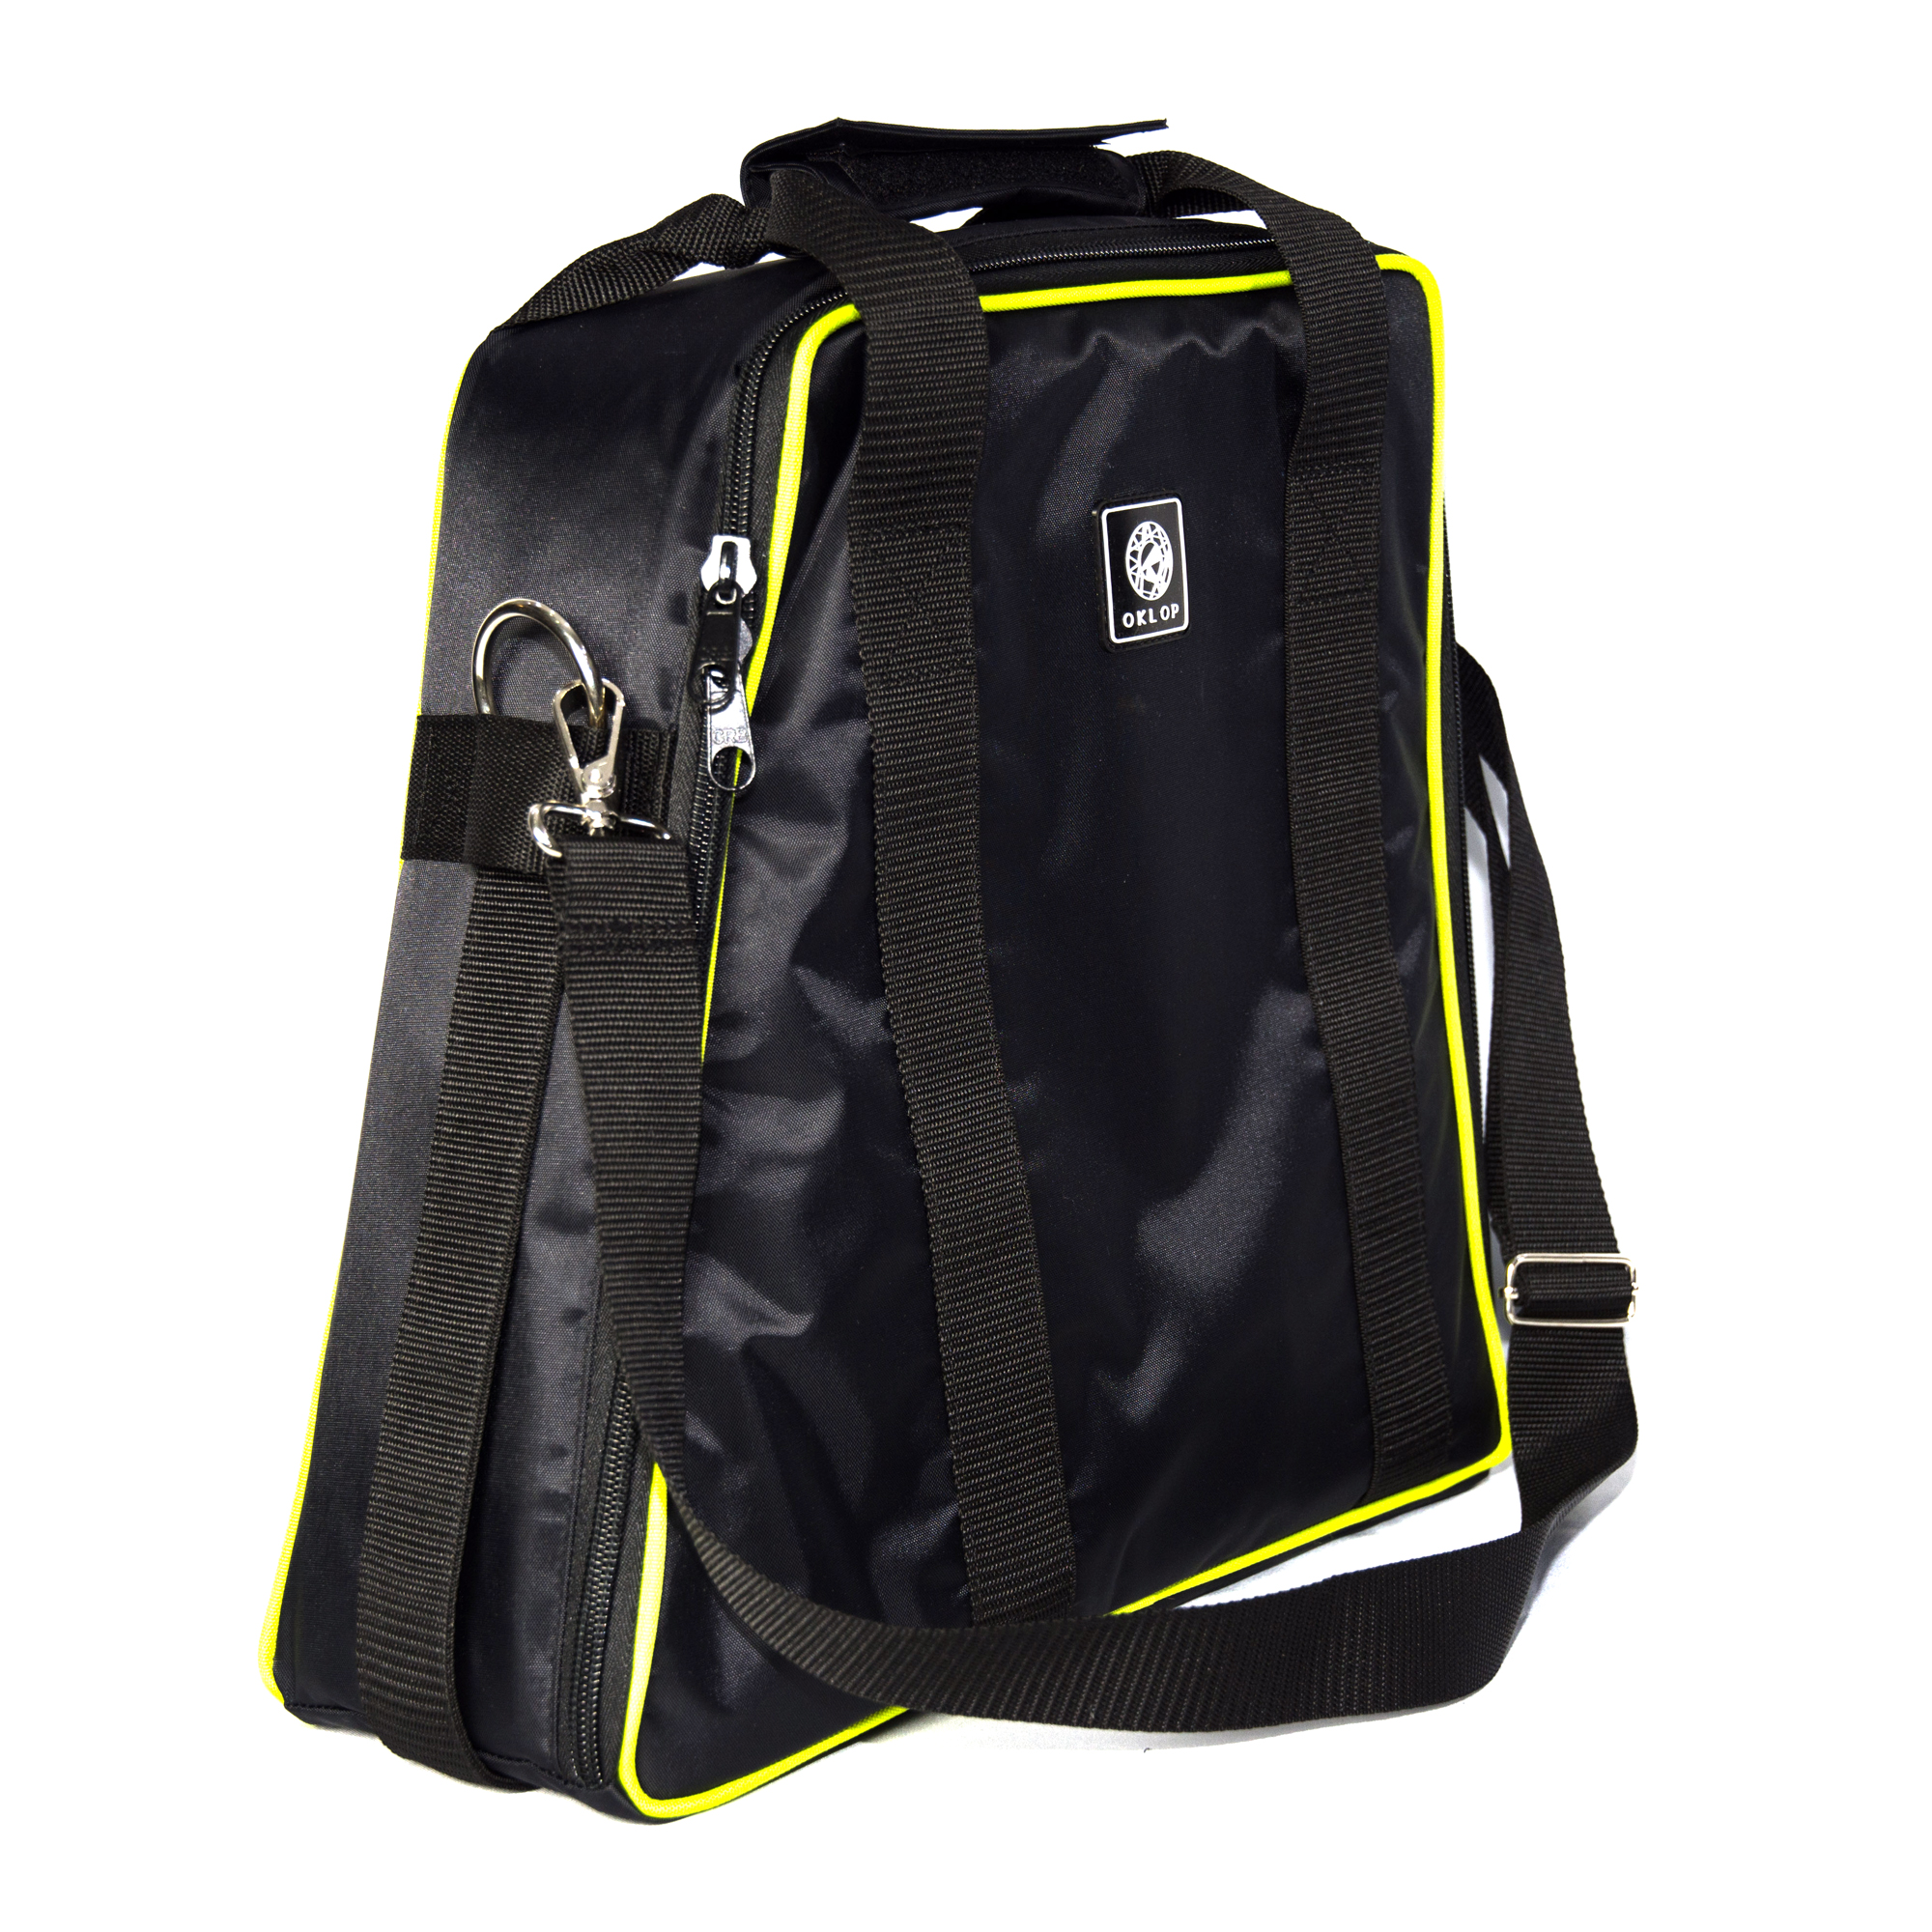 Oklop Padded Bag for Sky-Watcher EQ5 / HEQ5 / AZ-EQ5 Mounts